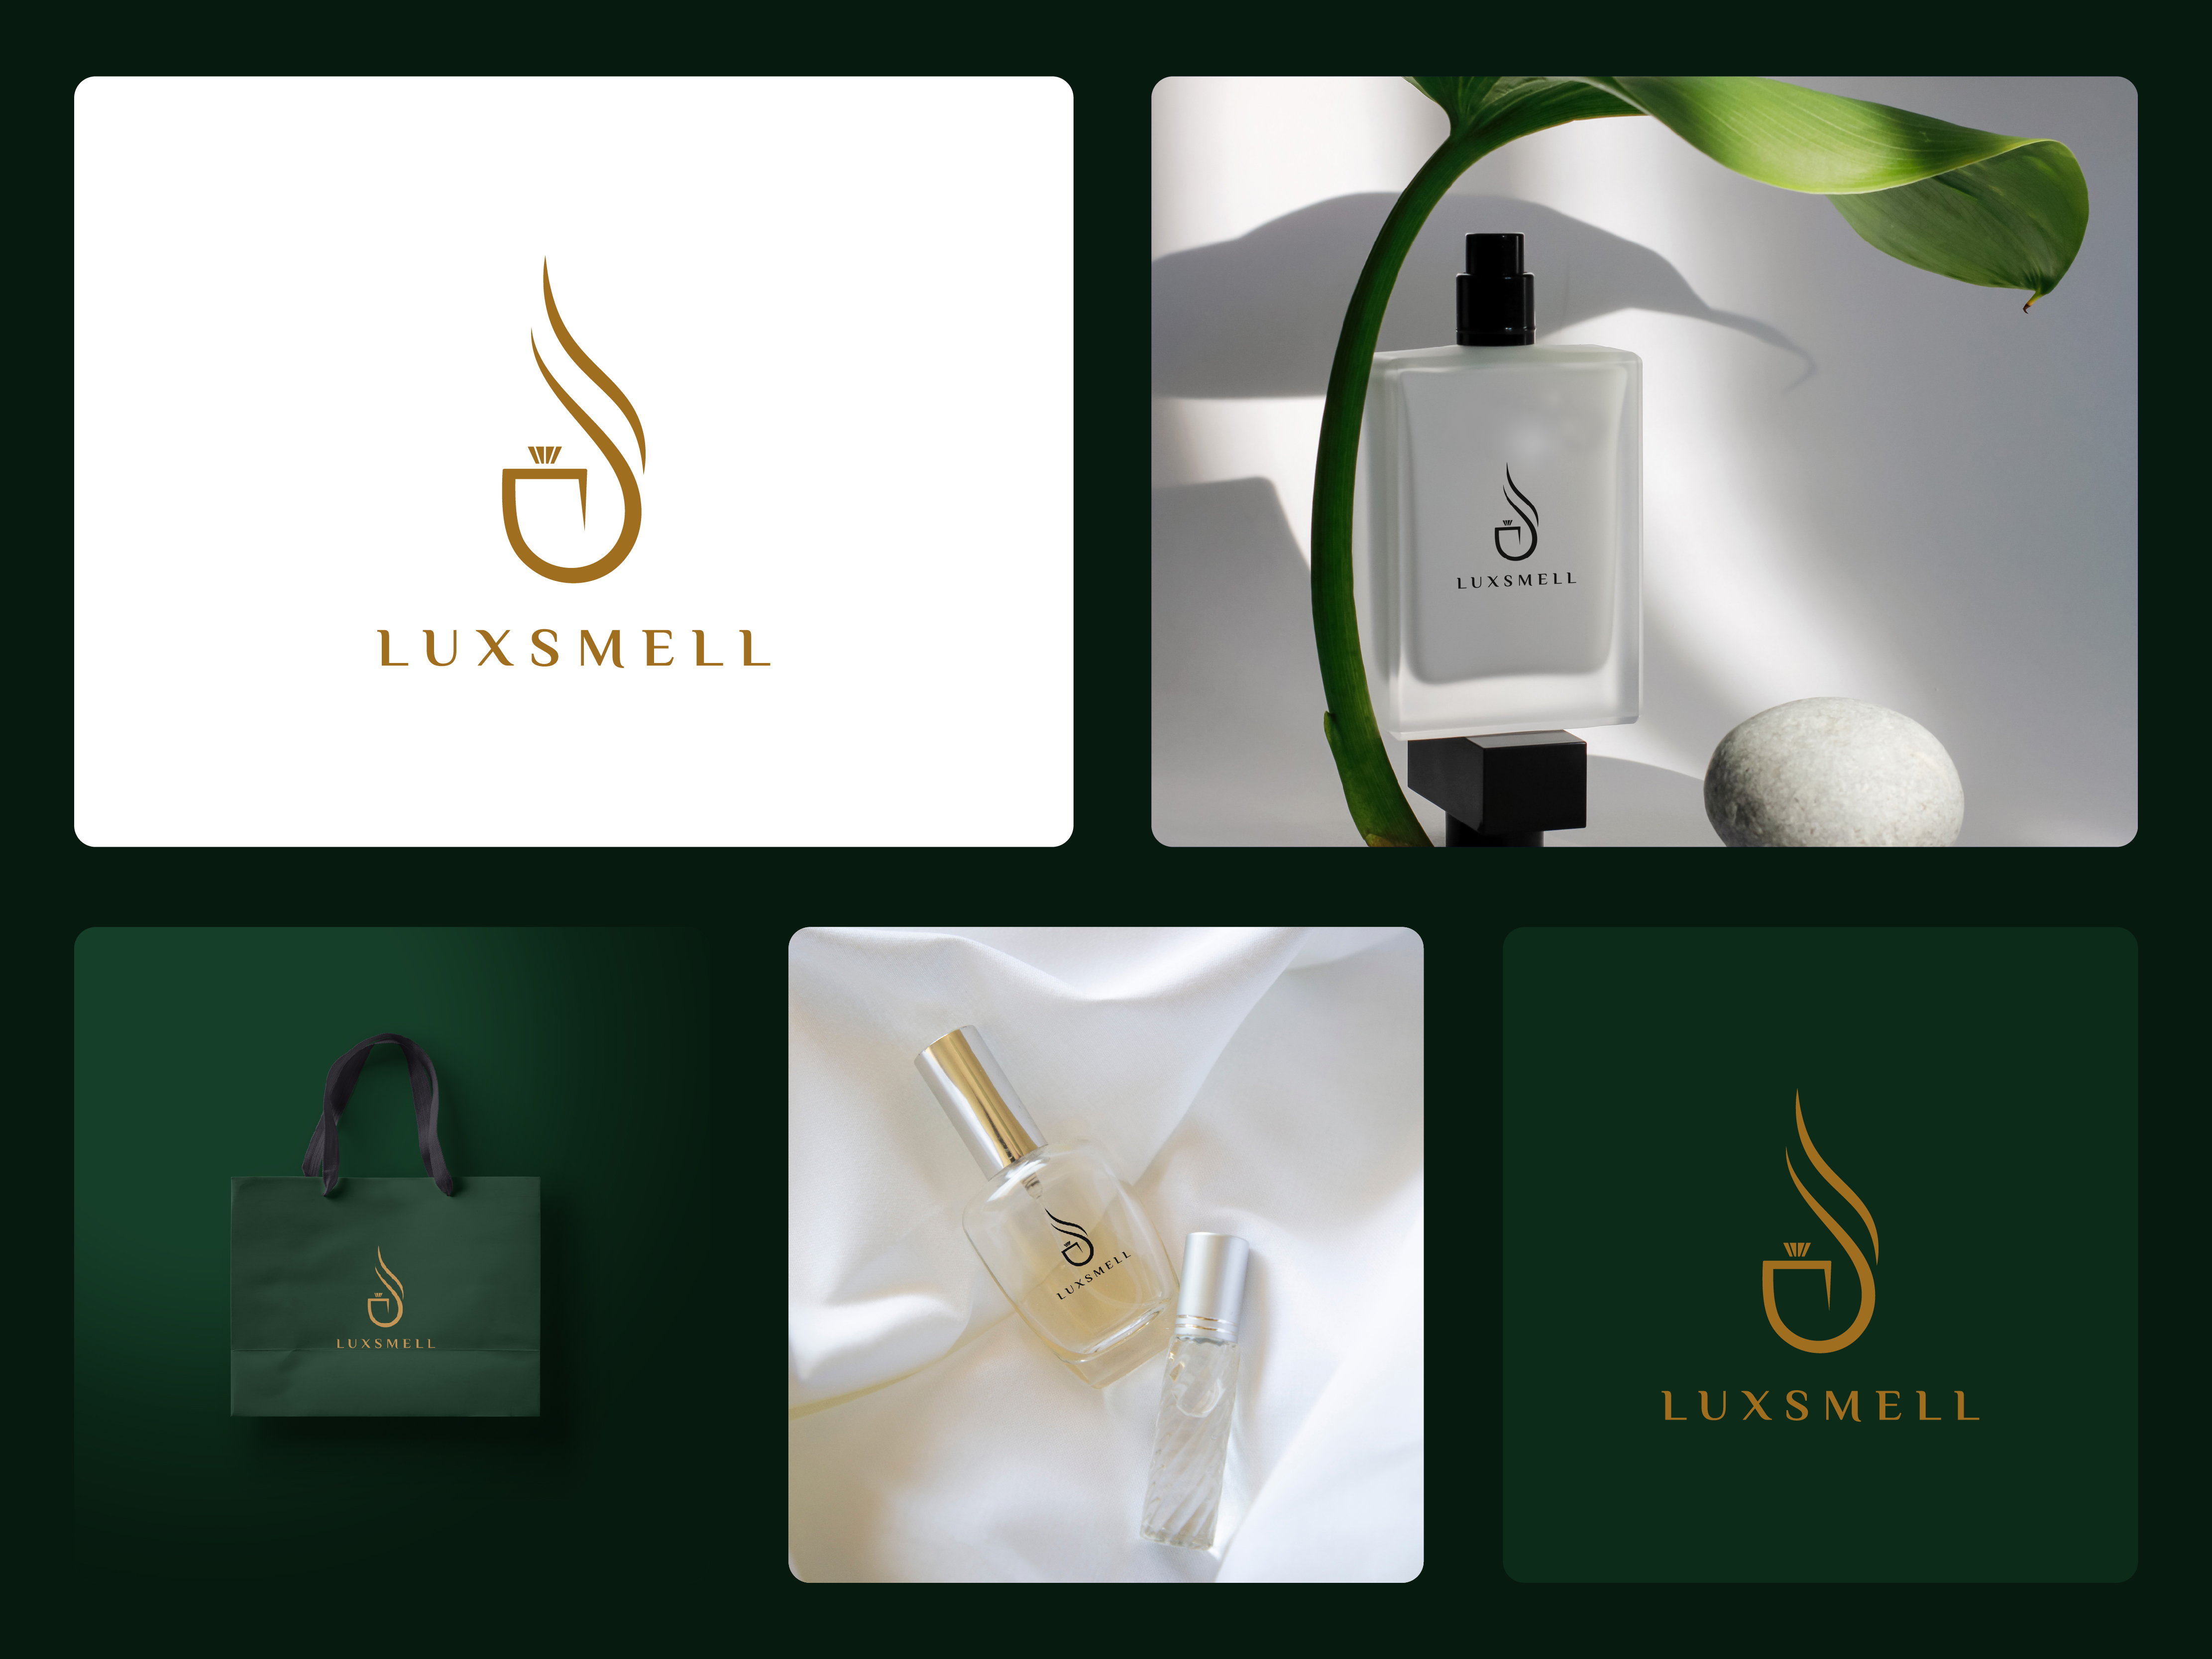 Luxury Perfume brand logo design by Jowel Ahmed on Dribbble